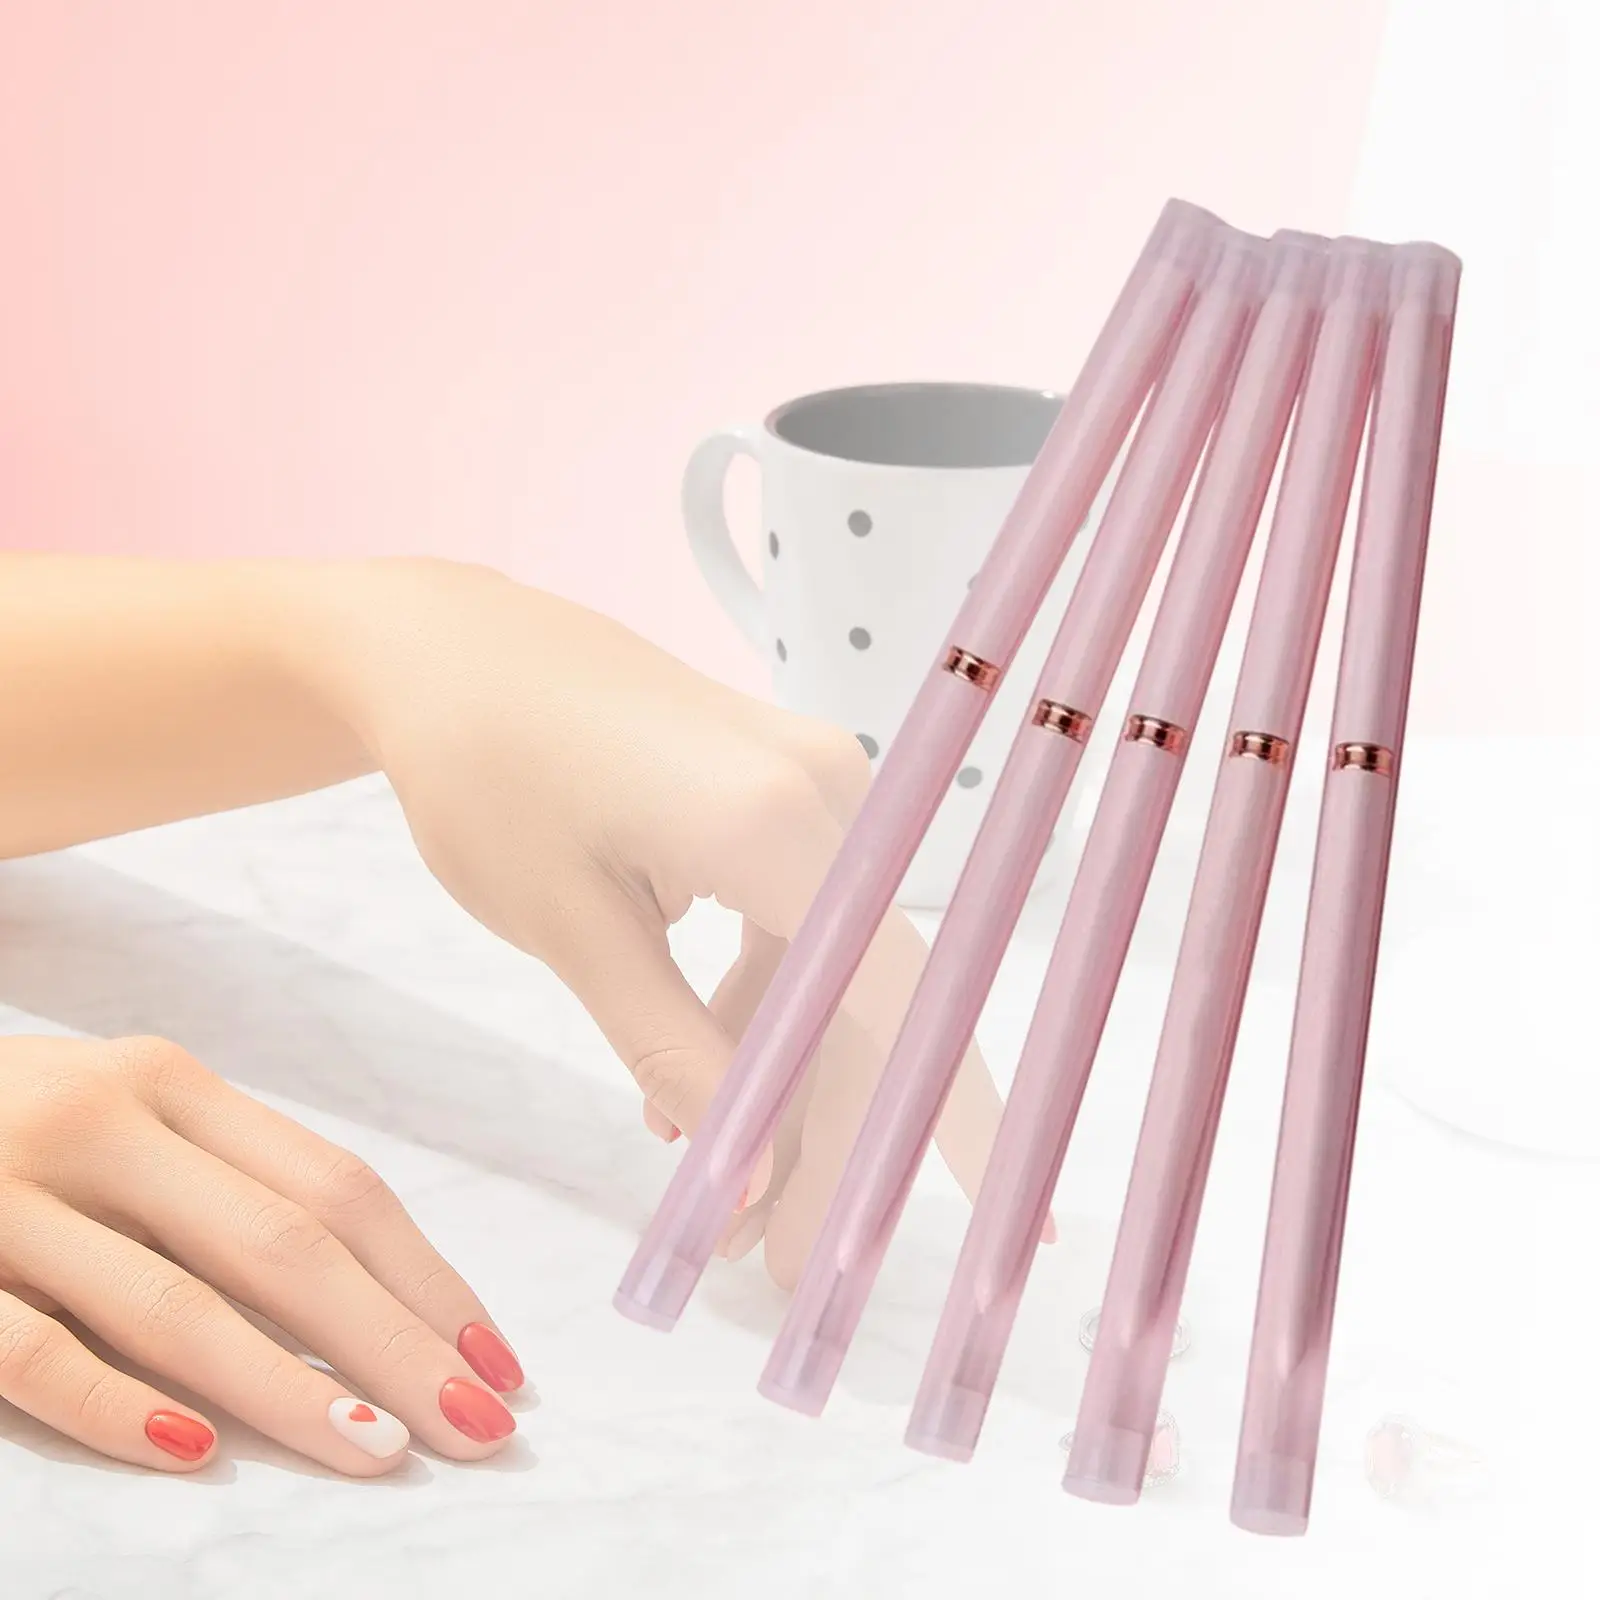 5x Nail Art Brushes Kit Nail Gel Polish Painting Nail Design Brushes Nail Art Pens for DIY Professional Design Delicate Coloring